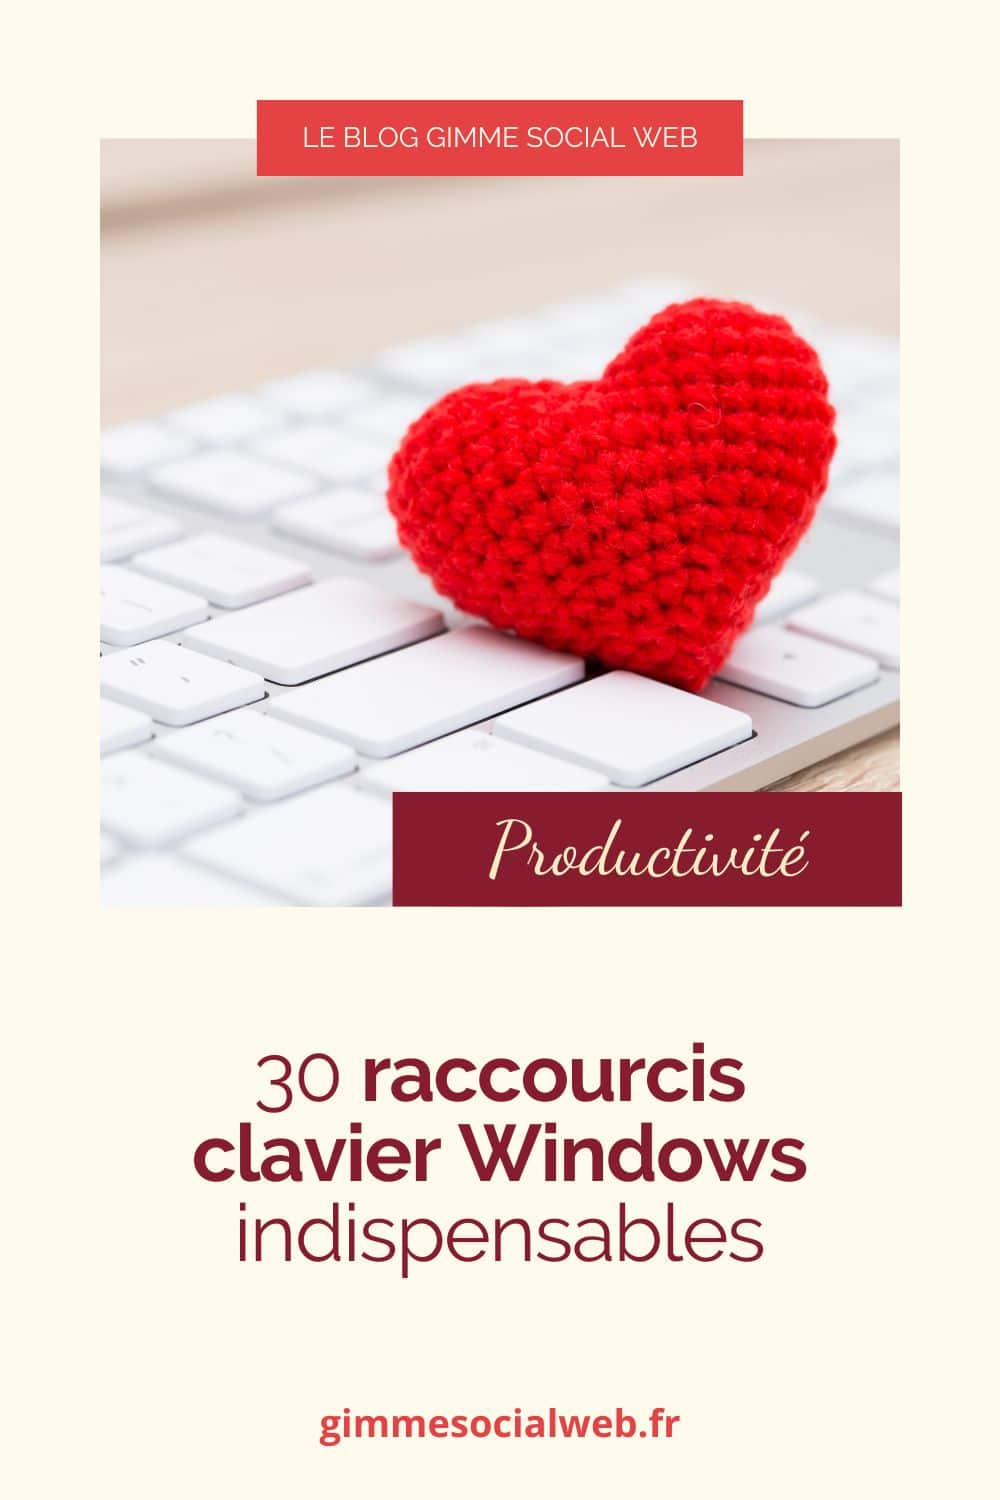 Epingle Pinterest raccourcis clavier Windows - Gimme Social Web